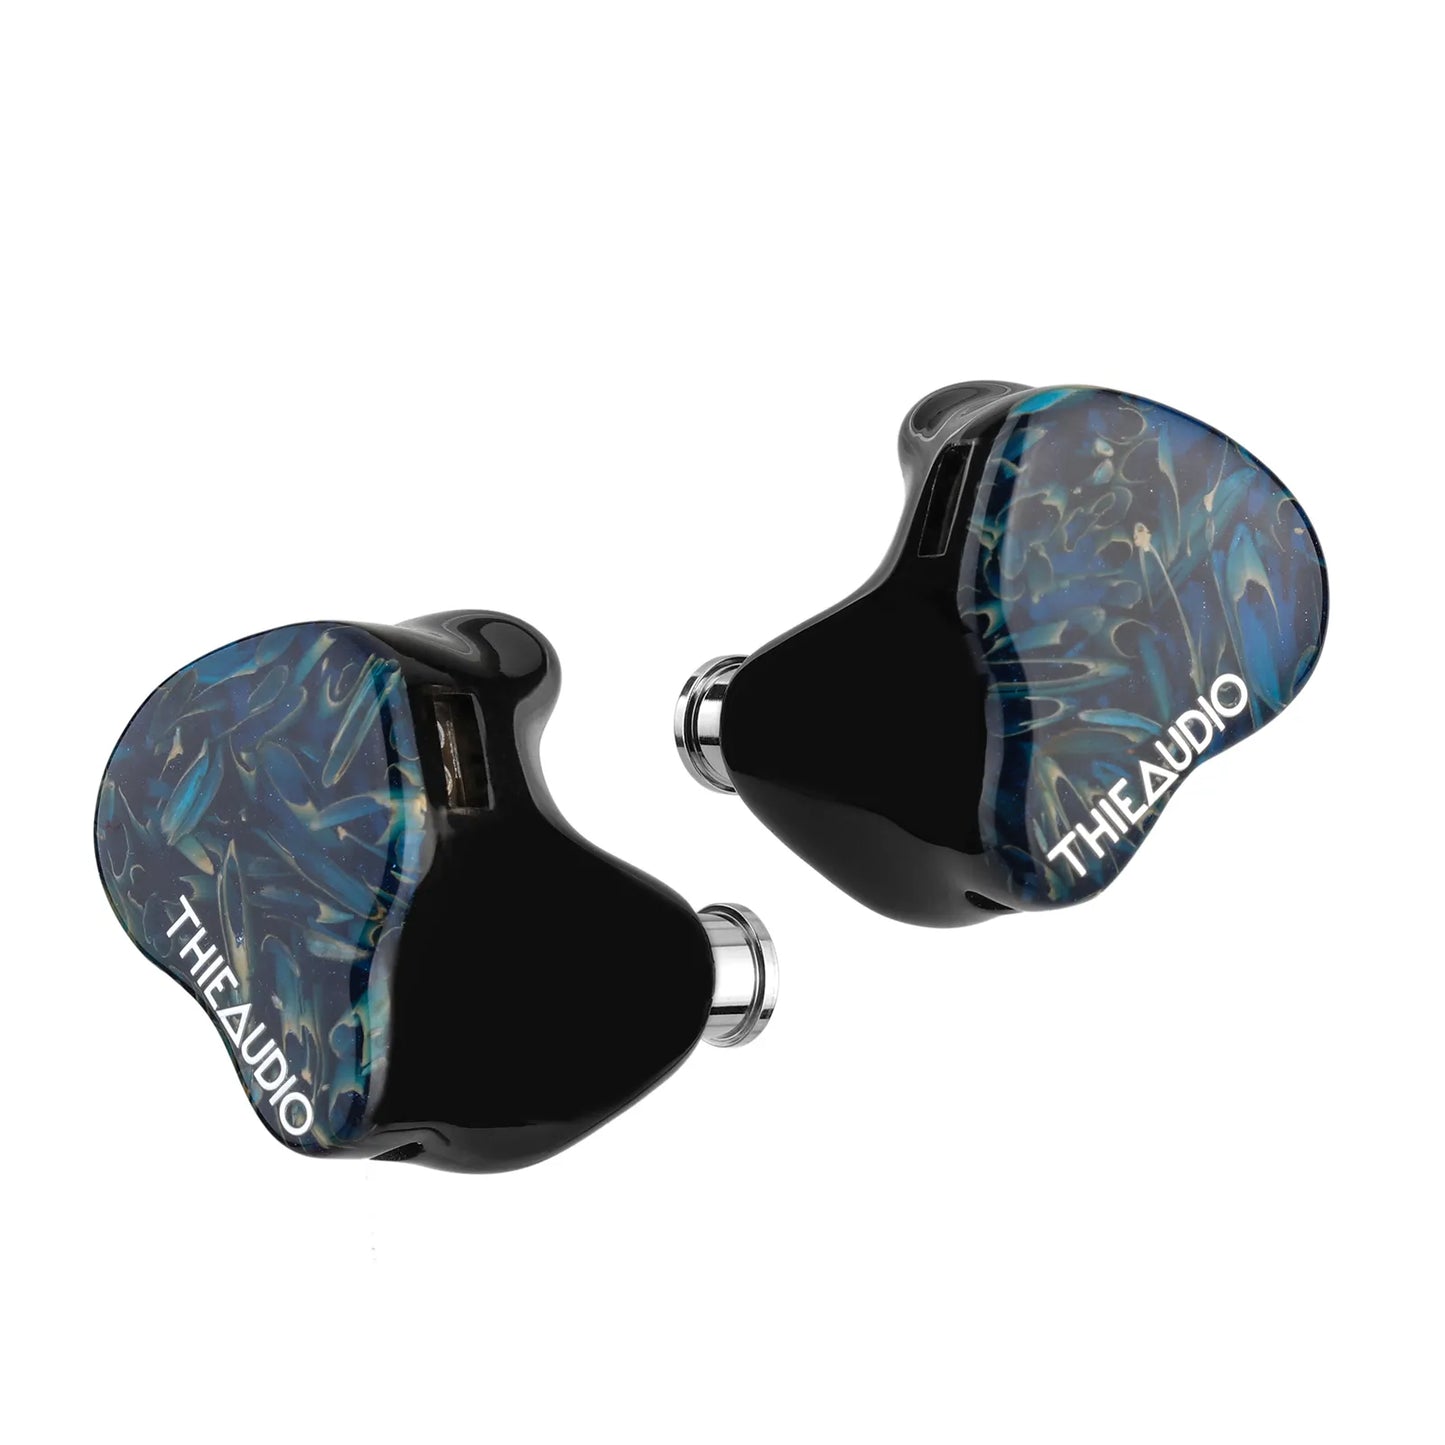 THIEAUDIO Hype 2 New Generation 2DD + 2BA In-Ear Monitor